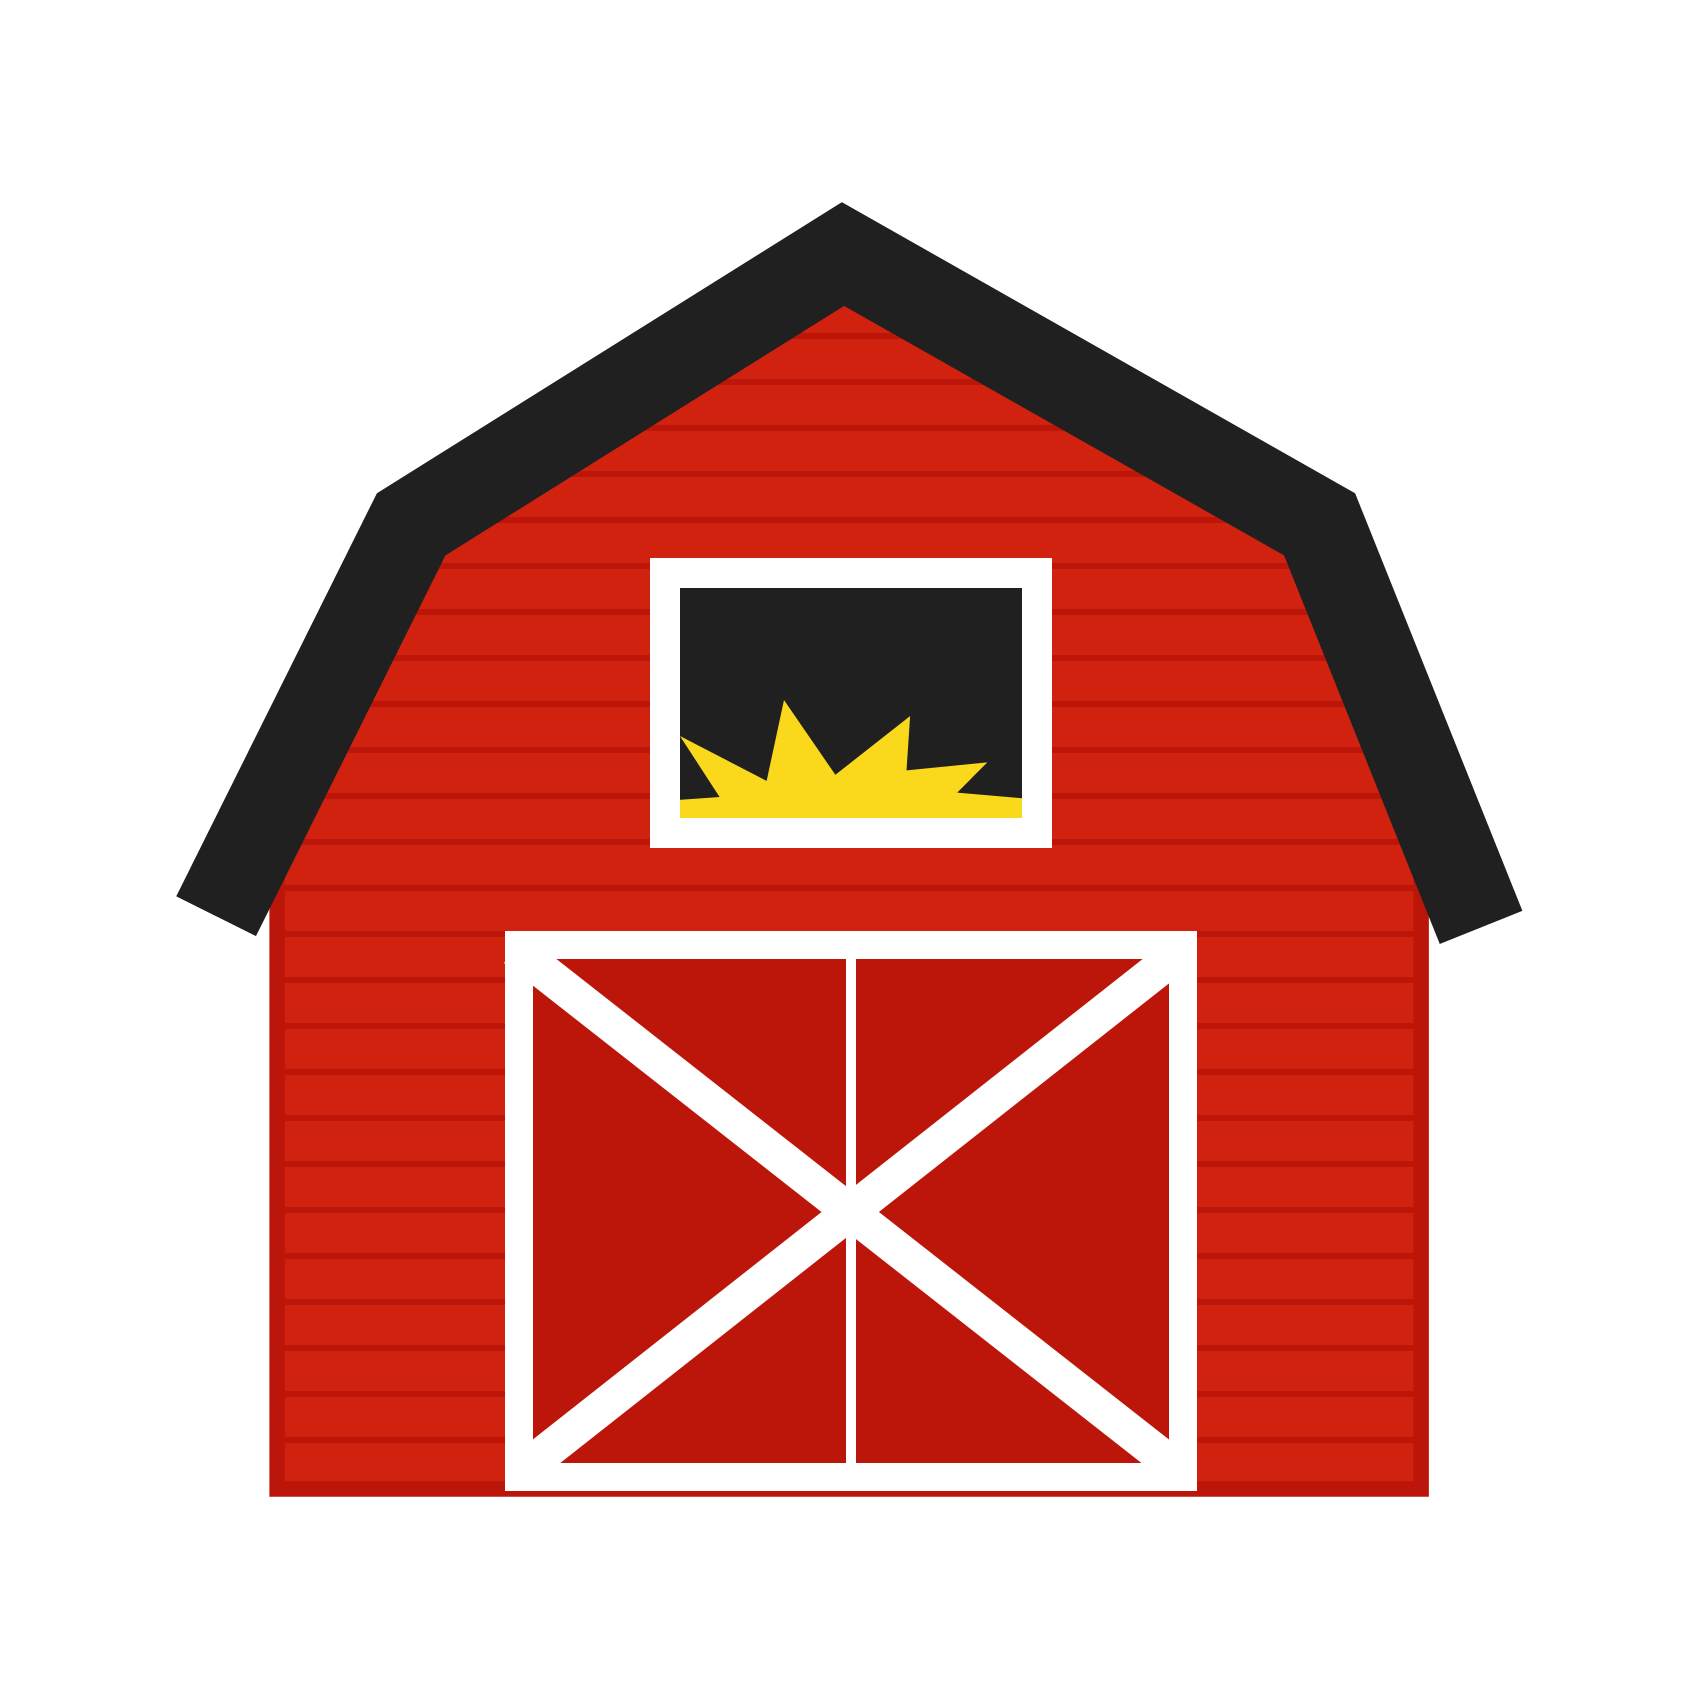 Farmhouse Clipart - Free Clip